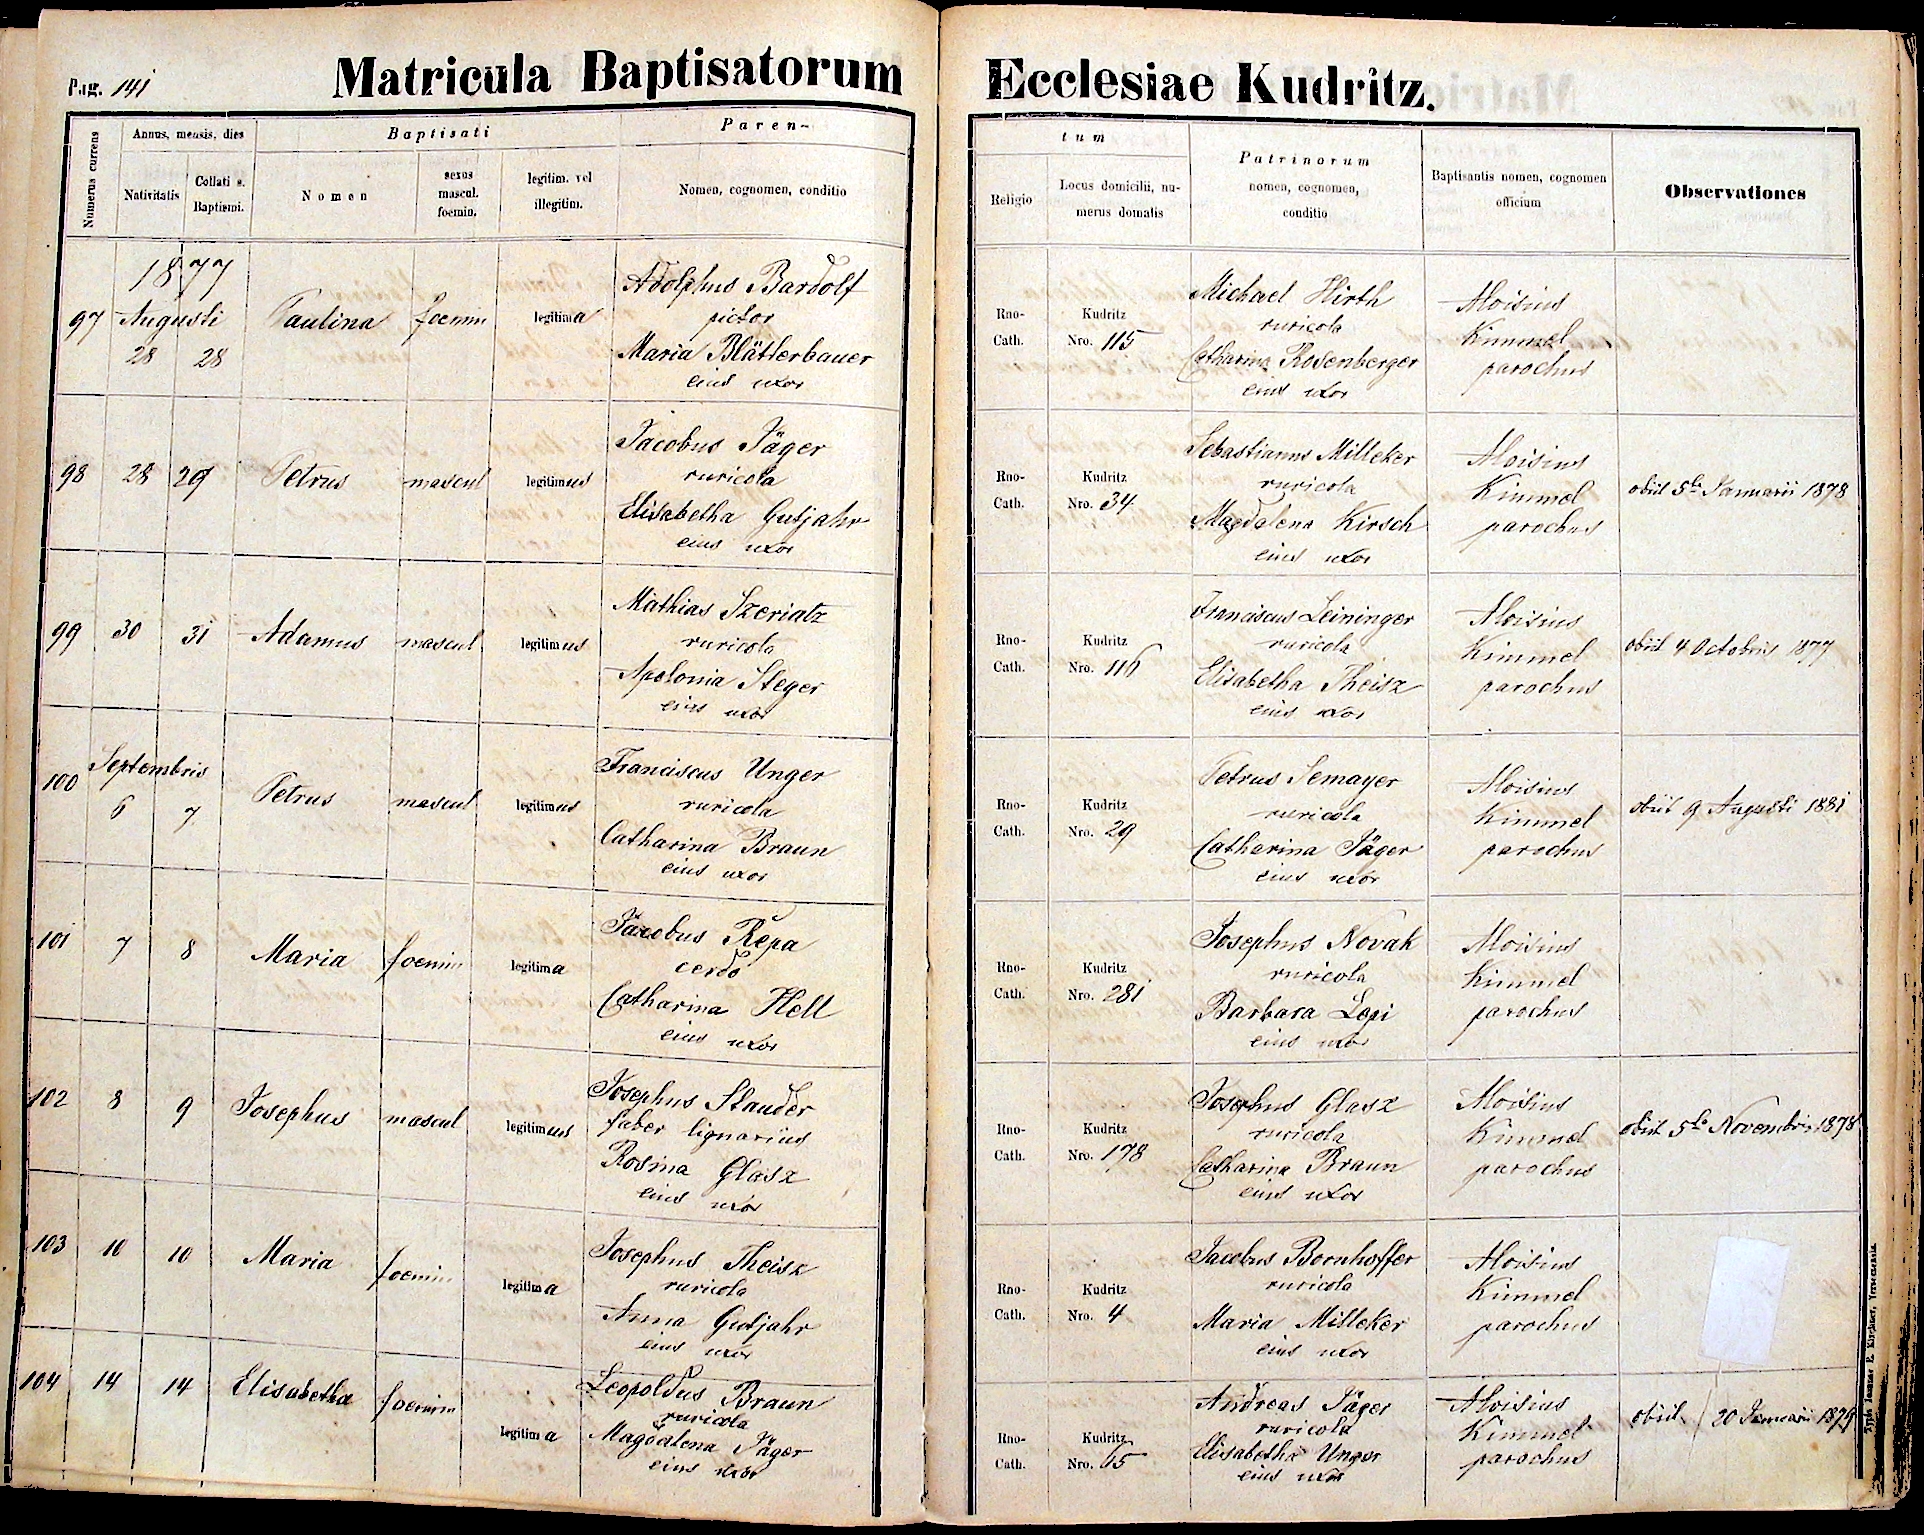 images/church_records/BIRTHS/1870-1879B/1877/141